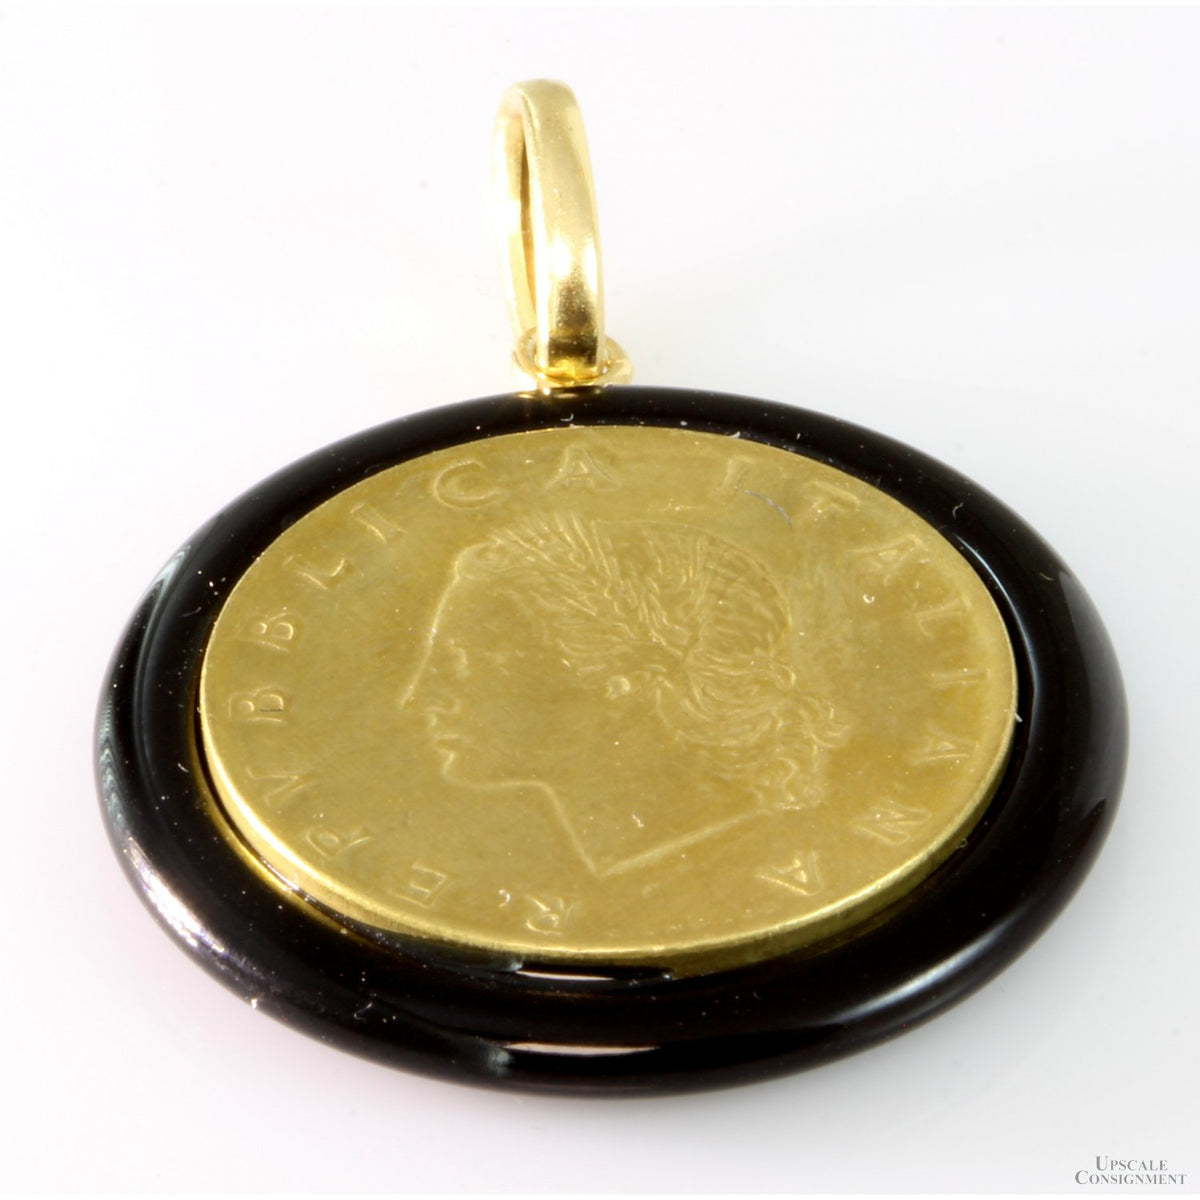 Italiana Repvbblica Lira Coin Black Onyx 14K Gold Pendant